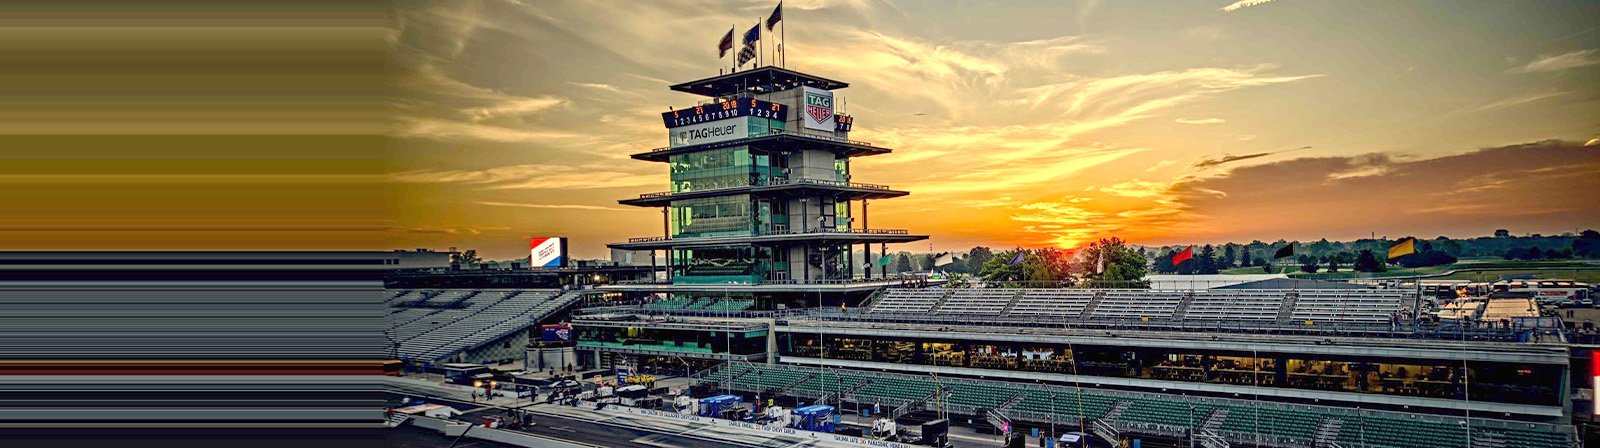 Indianapolis Motor Speedway photo